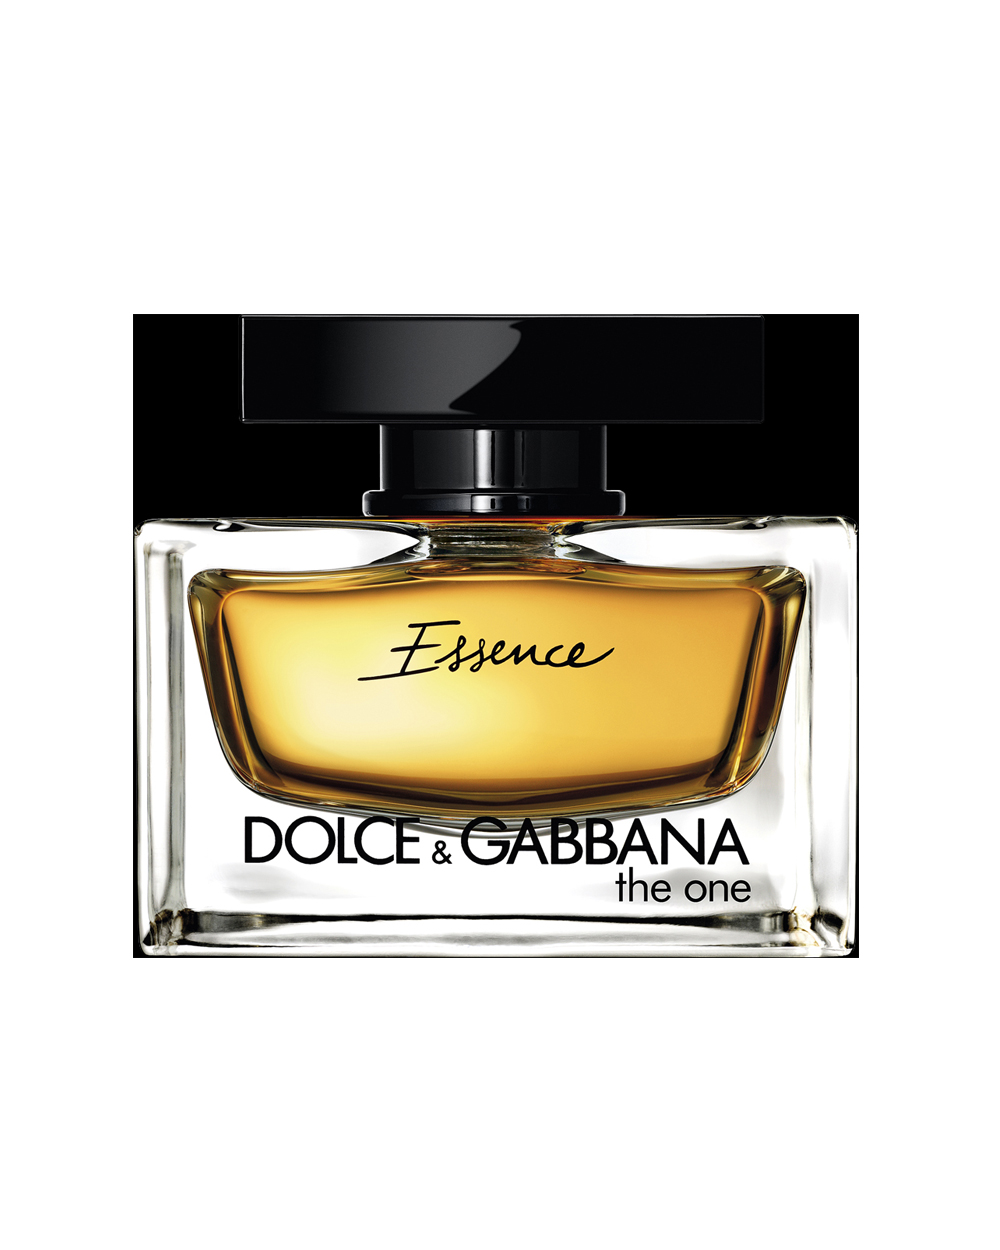 Dolce & Gabbana The One Essence EDP 40ml, $139.